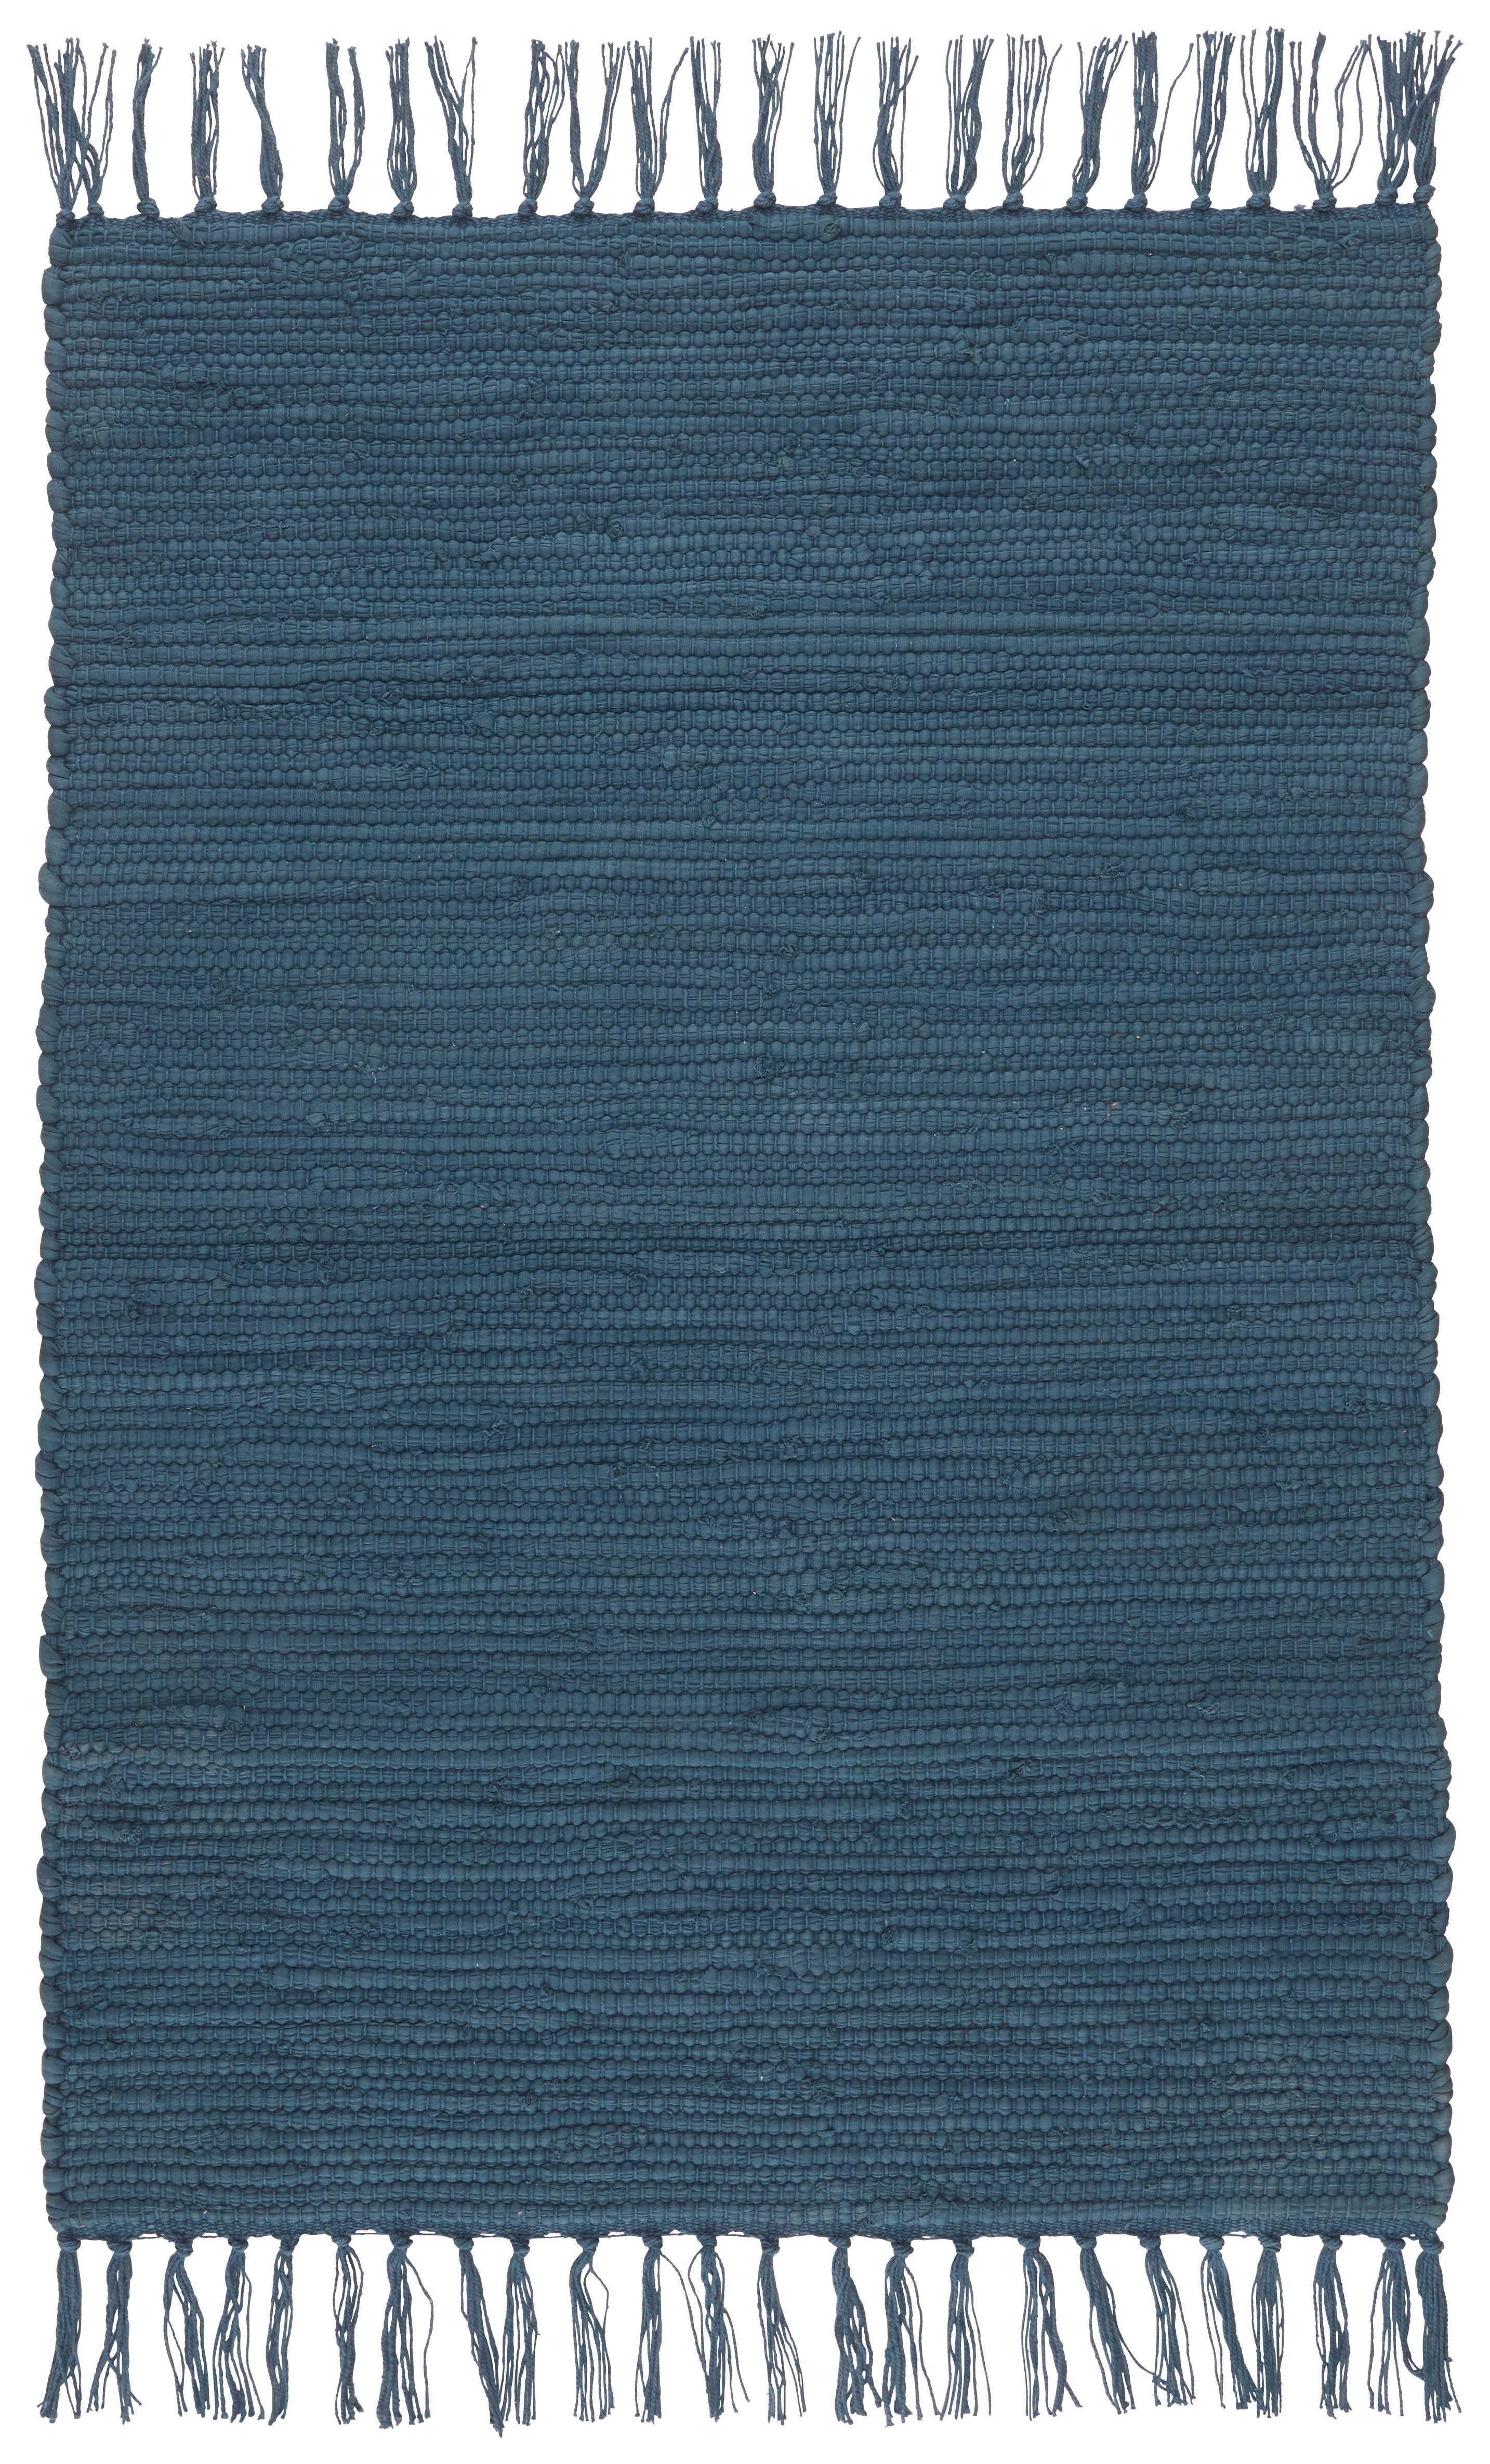 Hadrový Koberec Julia 1, 60/90cm, Tm. Modrá - tmavě modrá, Romantický / Rustikální, textil (60/90cm) - Modern Living